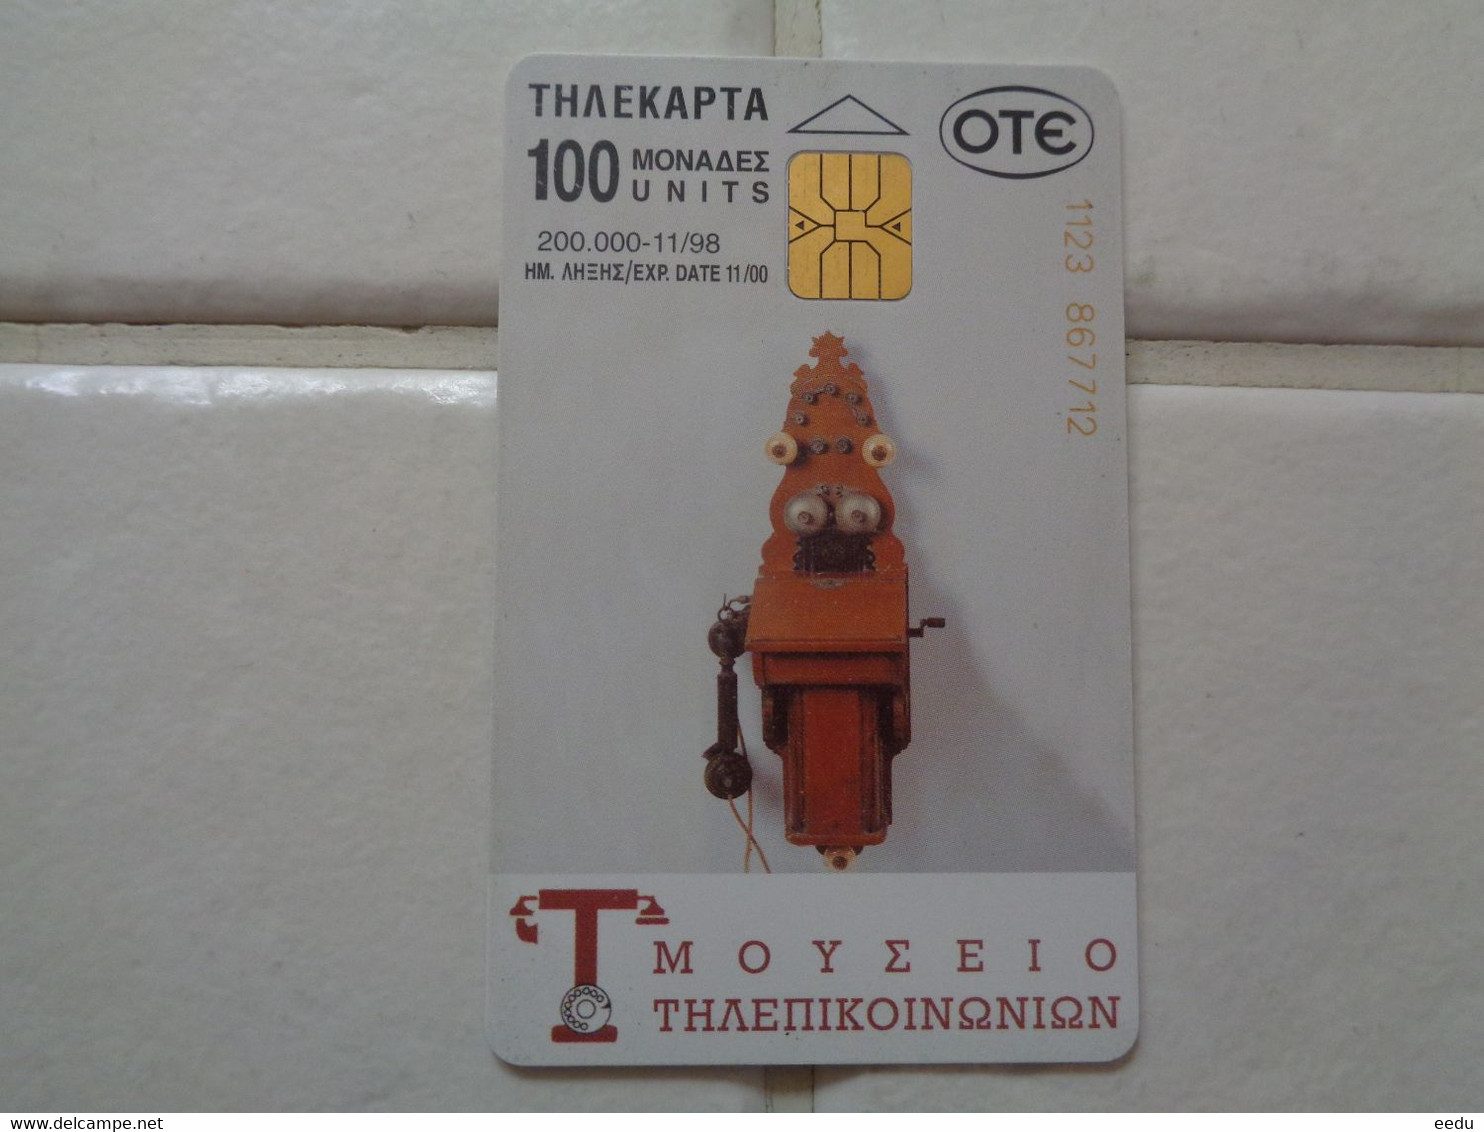 Greece Phonecard - Telefone